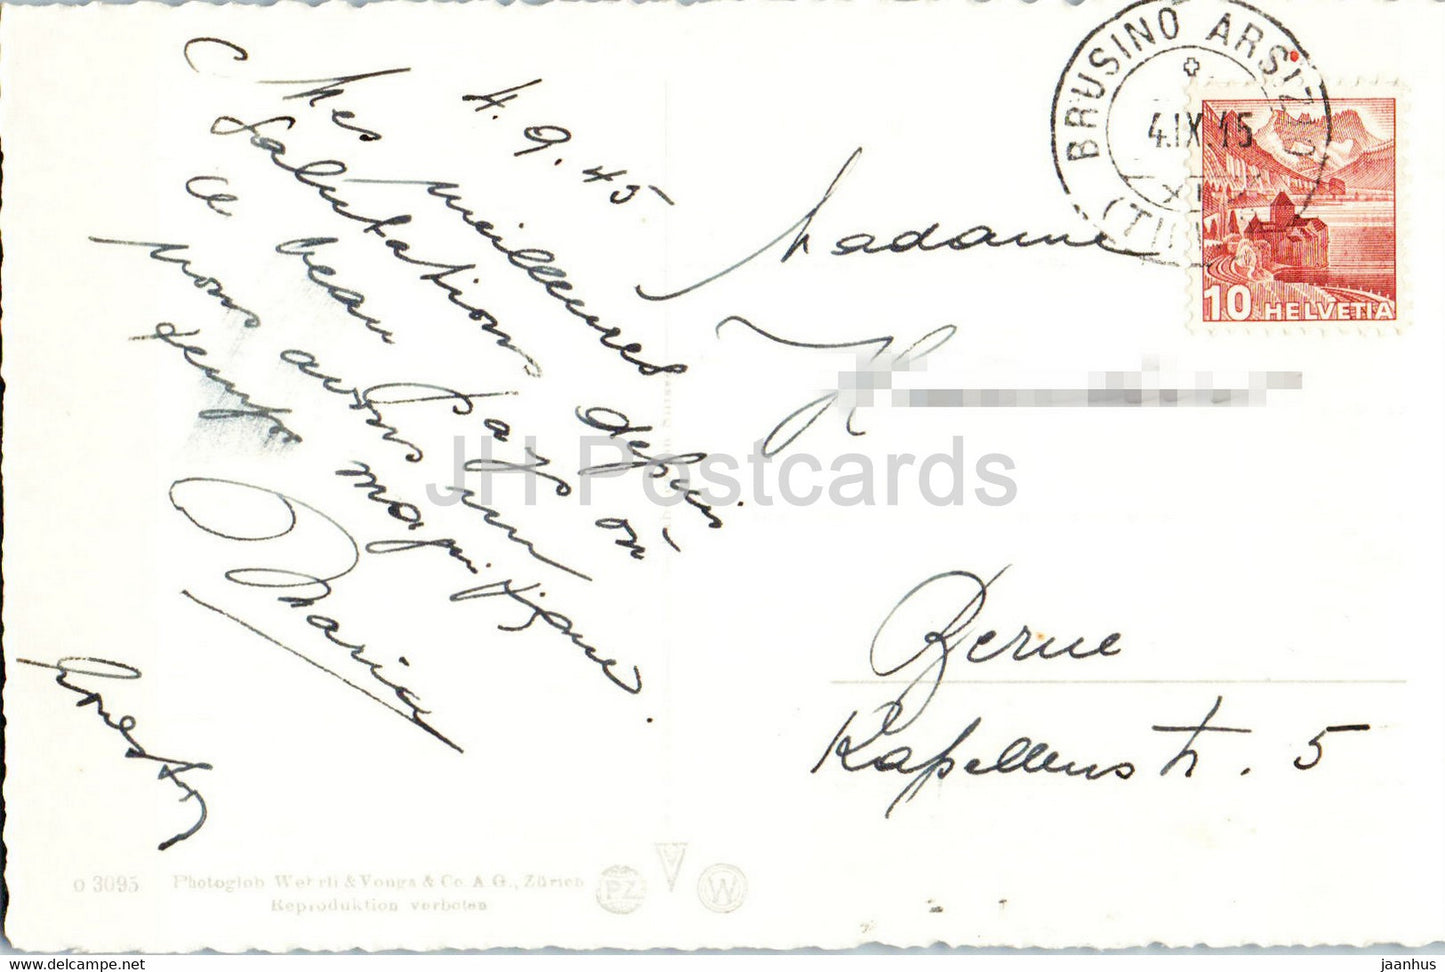 Morcote - 3095 - 1945 - carte postale ancienne - Suisse - occasion